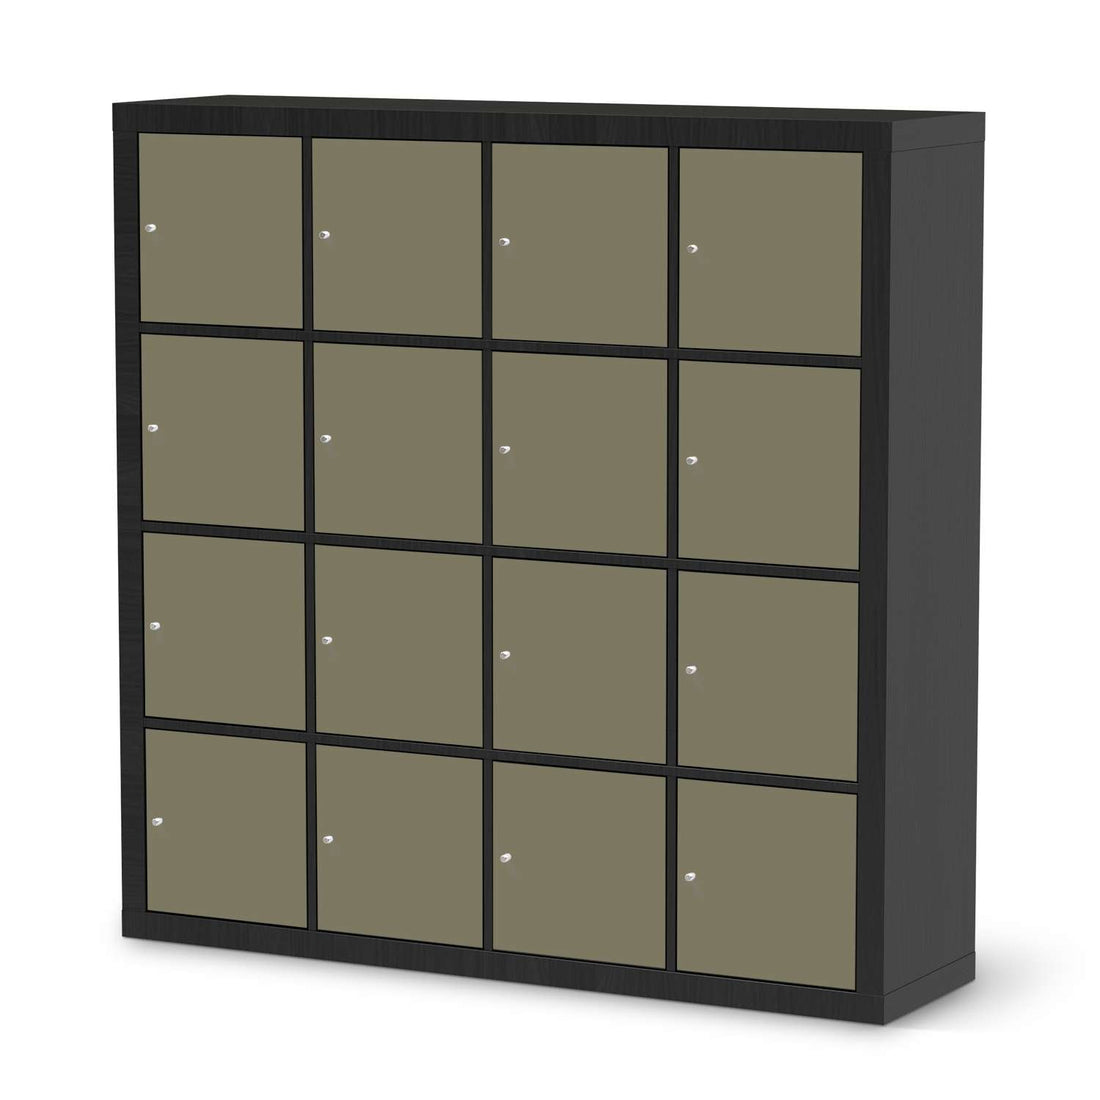 Möbelfolie Braungrau Light - IKEA Kallax Regal 16 Türen - schwarz